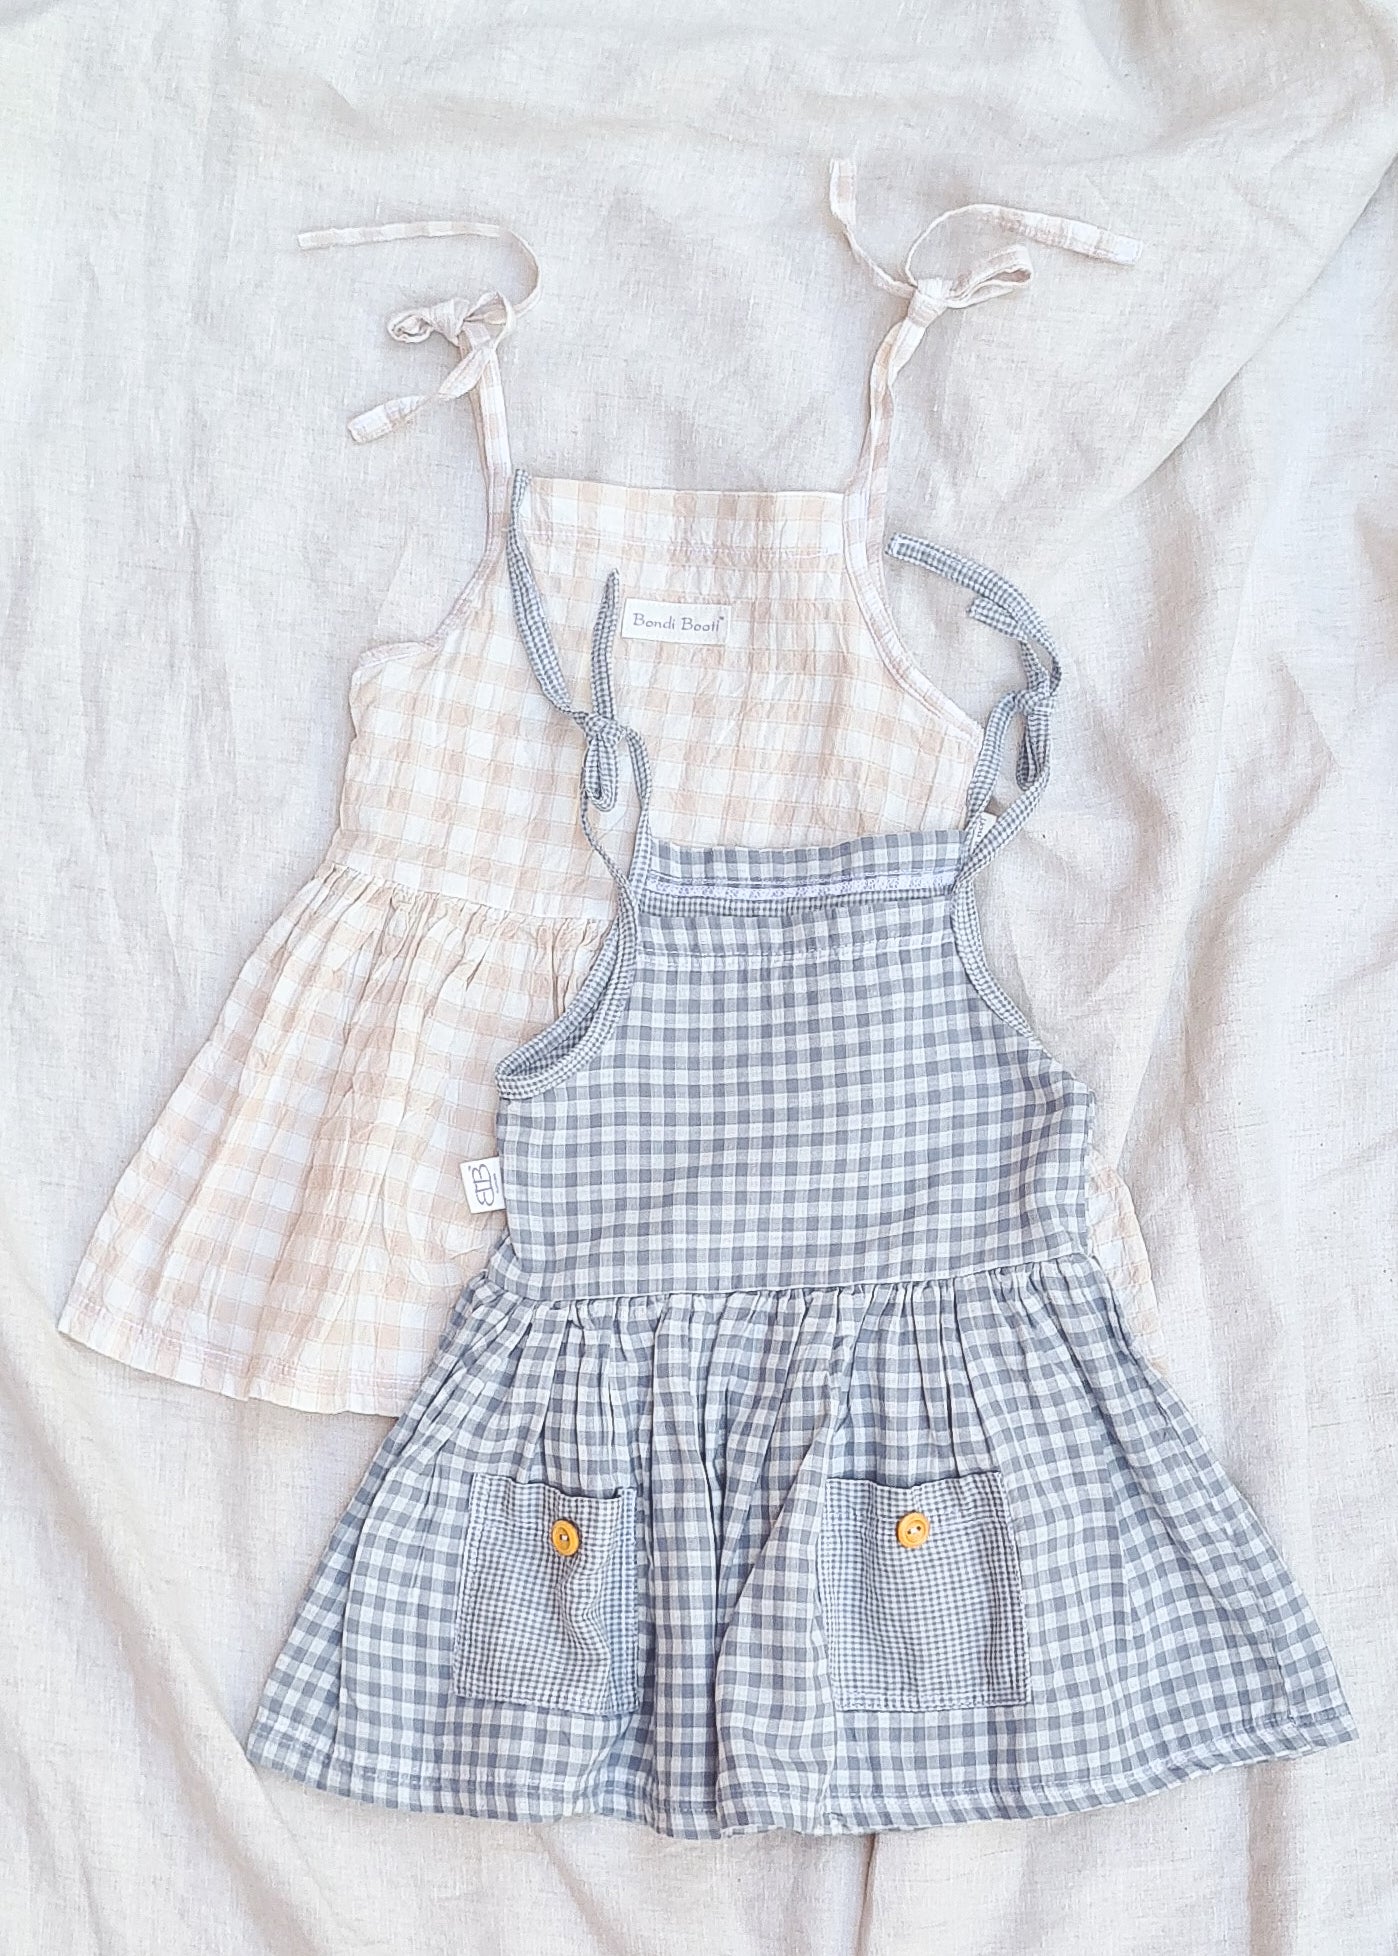 Baby toddler gingham dress blue